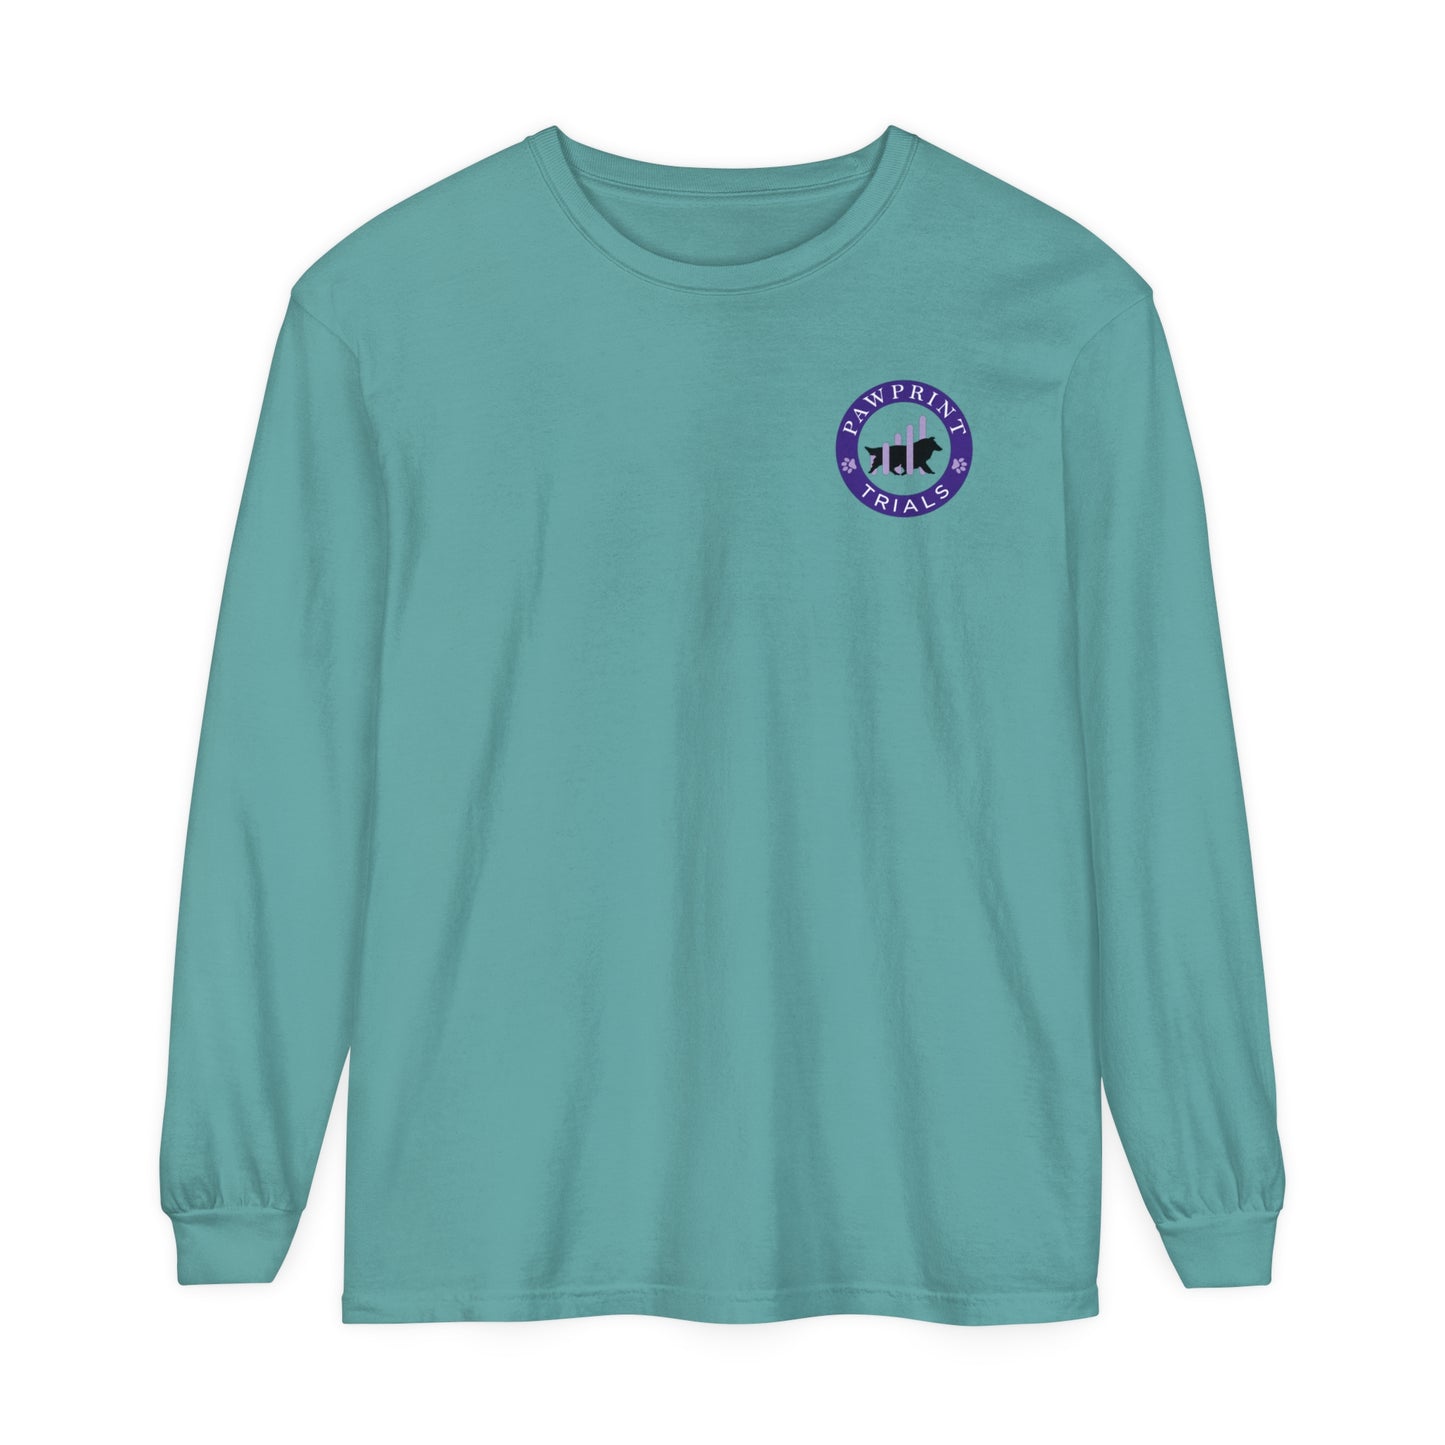 PawPrint Trials Unisex Garment-dyed Long Sleeve T-Shirt